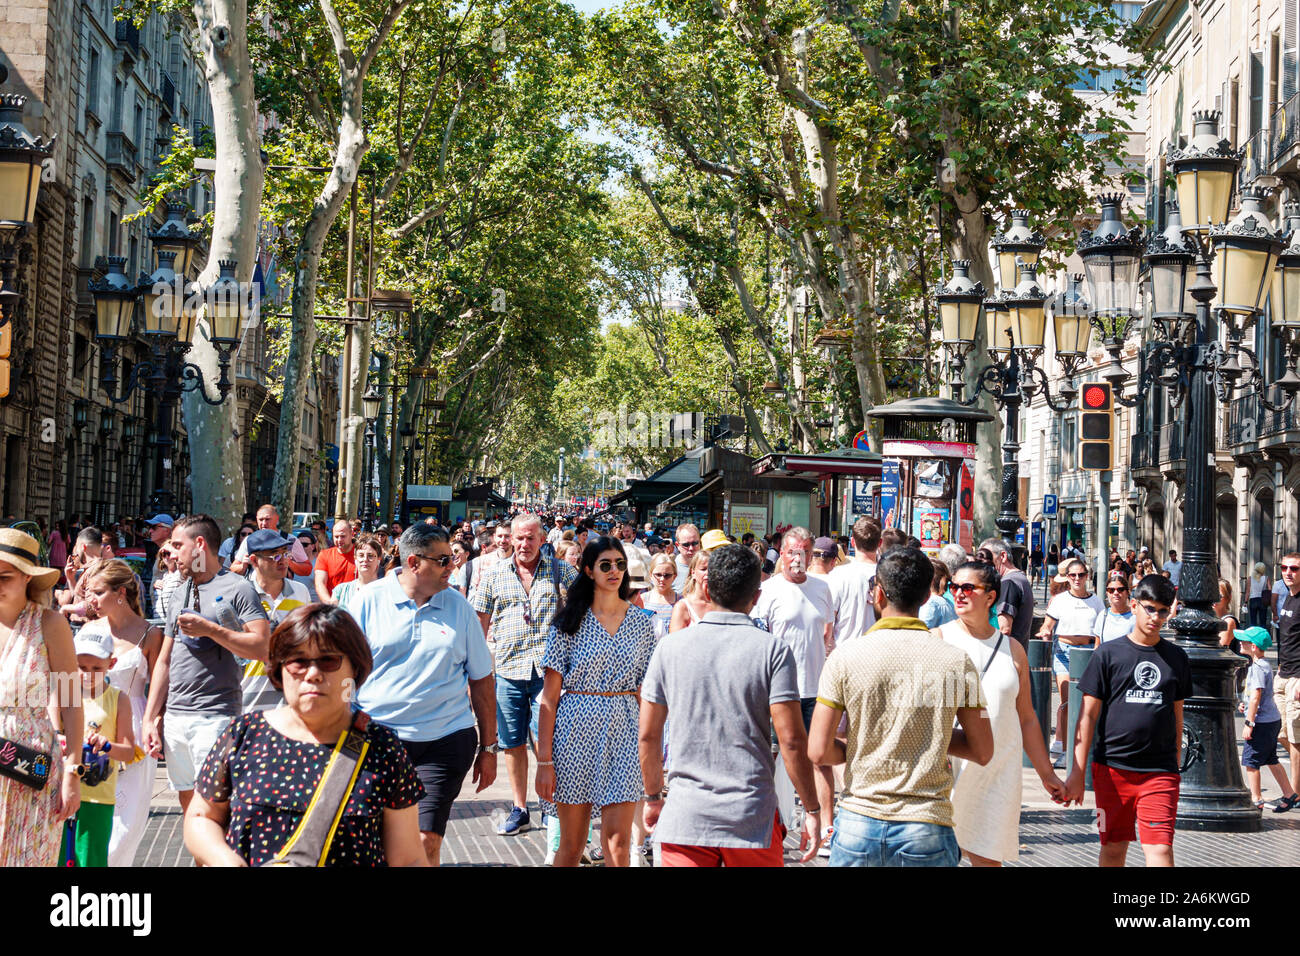 Barcelona Spain,Catalonia Ciutat Vella,Barri Gotic,La Rambla,tree-lined pedestrian street promenade,pedestrians,man,woman,crowded,Hispanic,ES190824104 Stock Photo